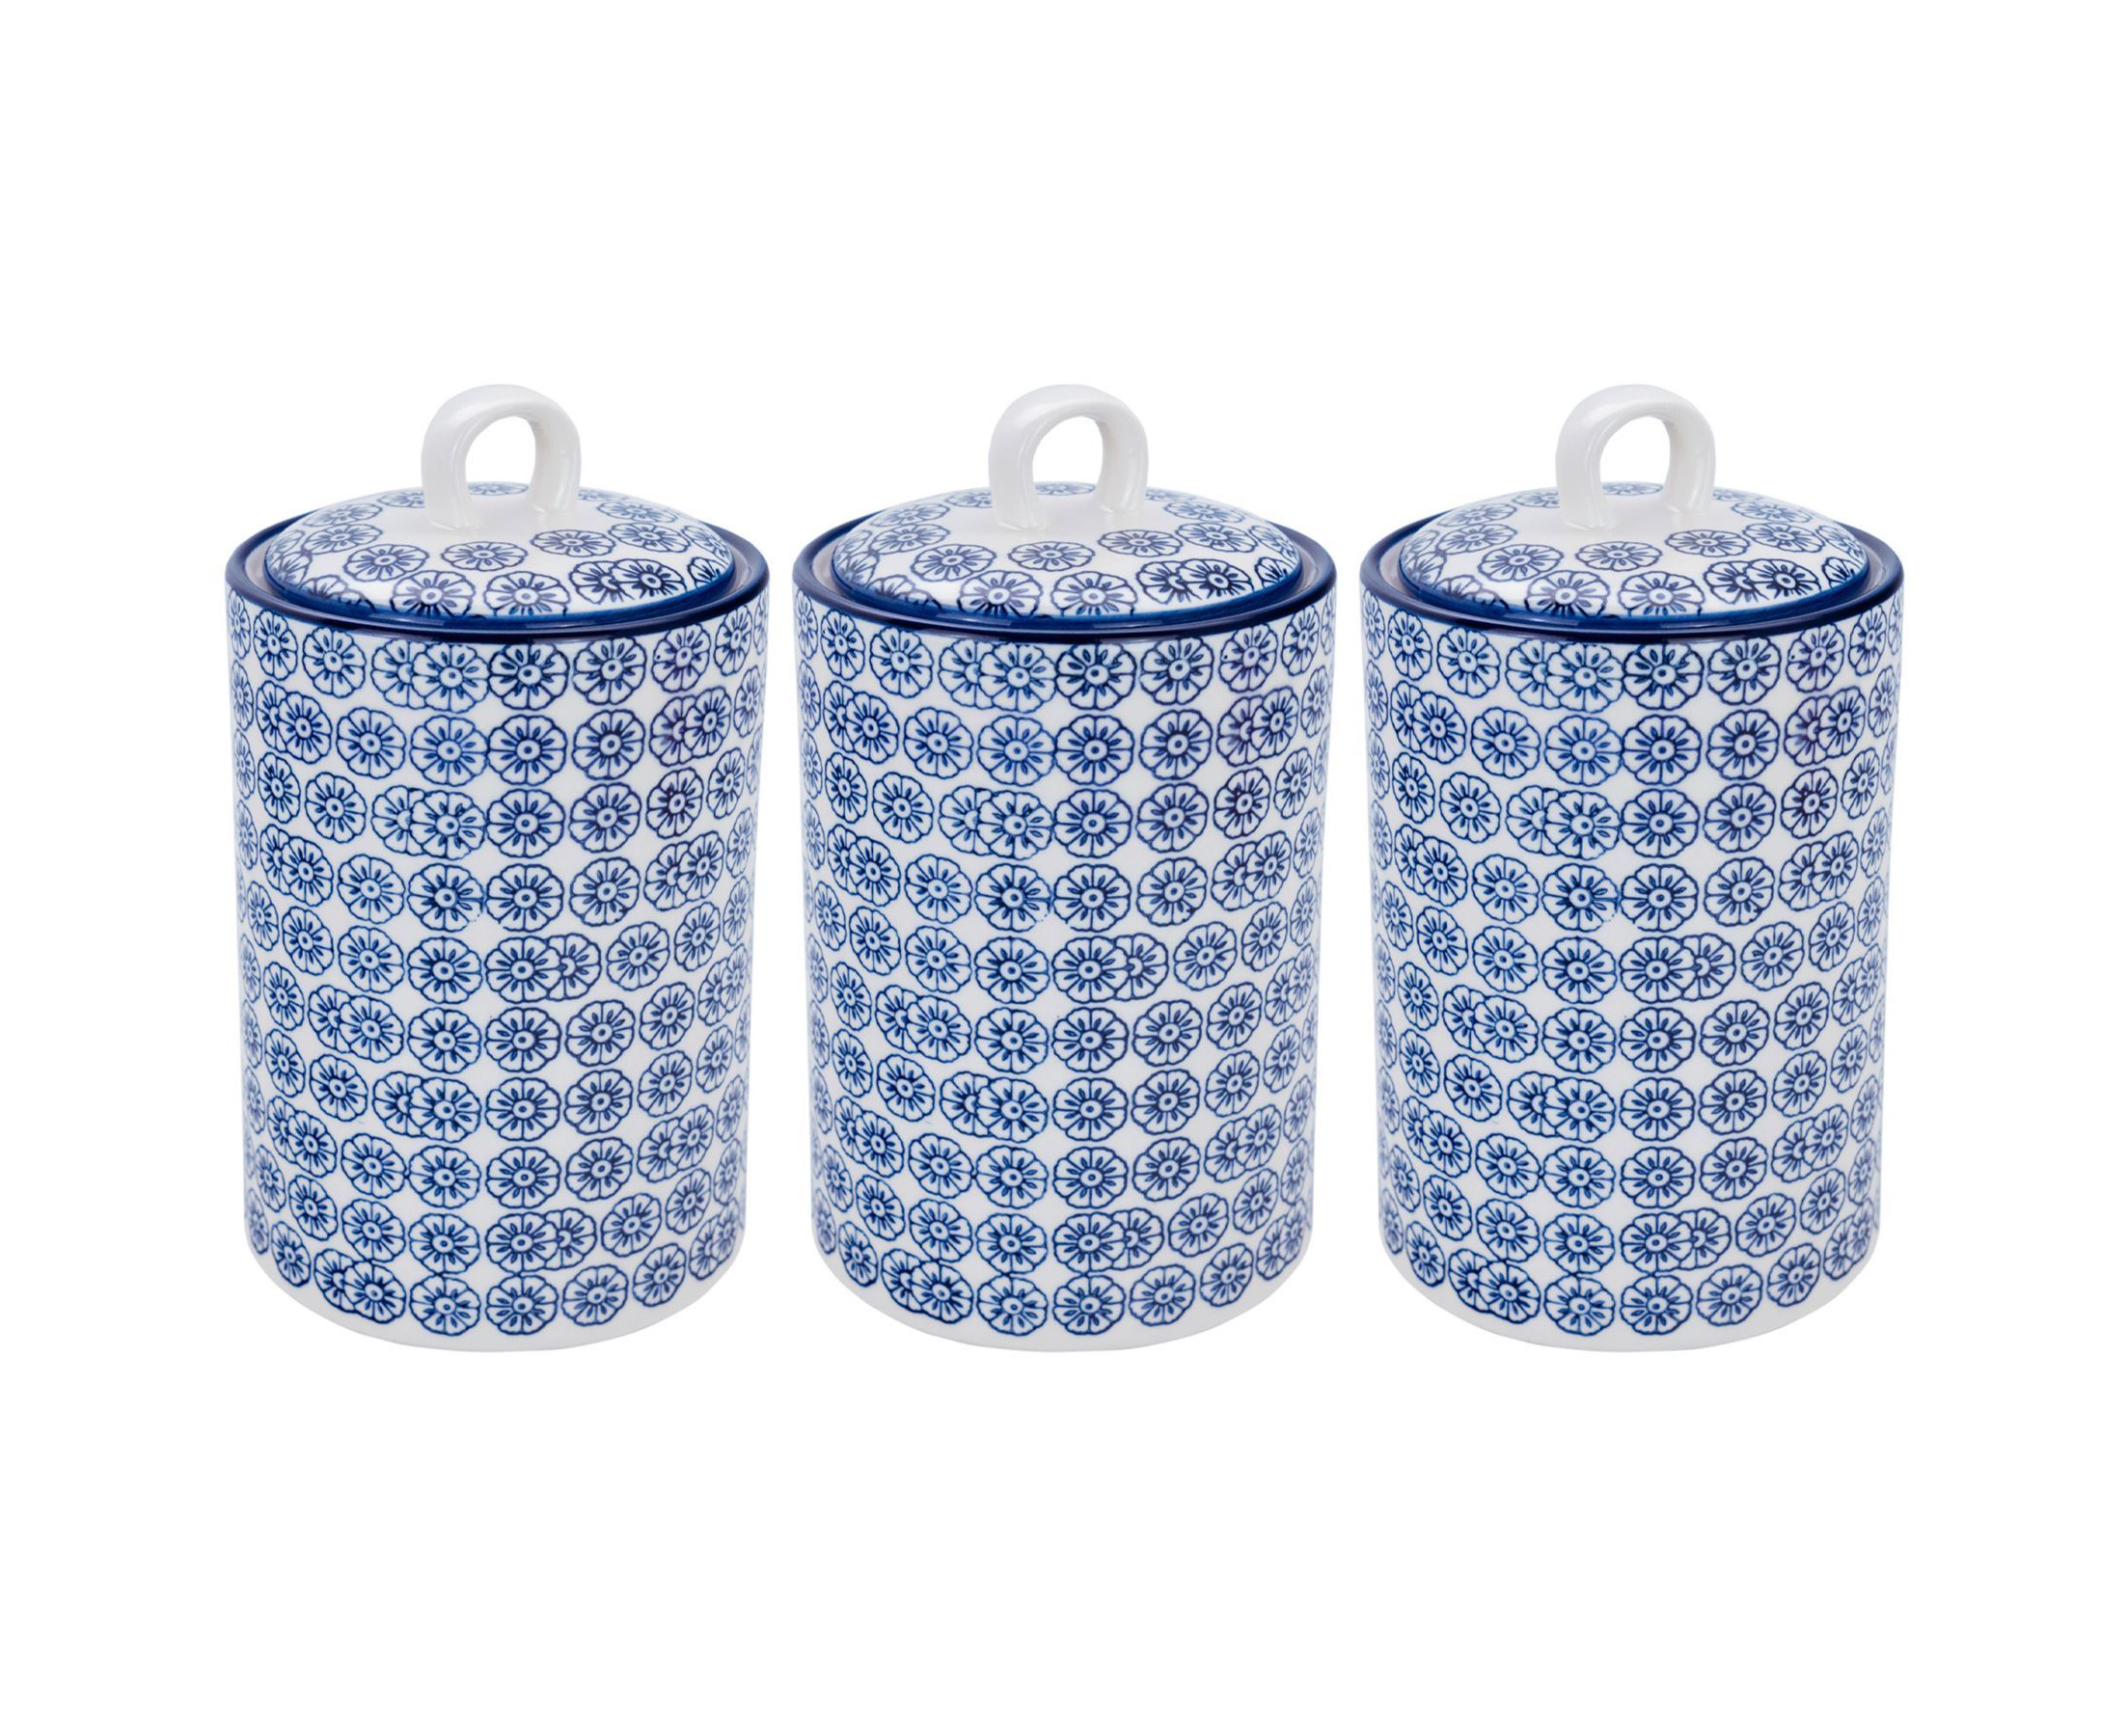 Nicola Spring Tea Coffee and Sugar Canister Storage Jar Porcelain Blue Flower Print Design 